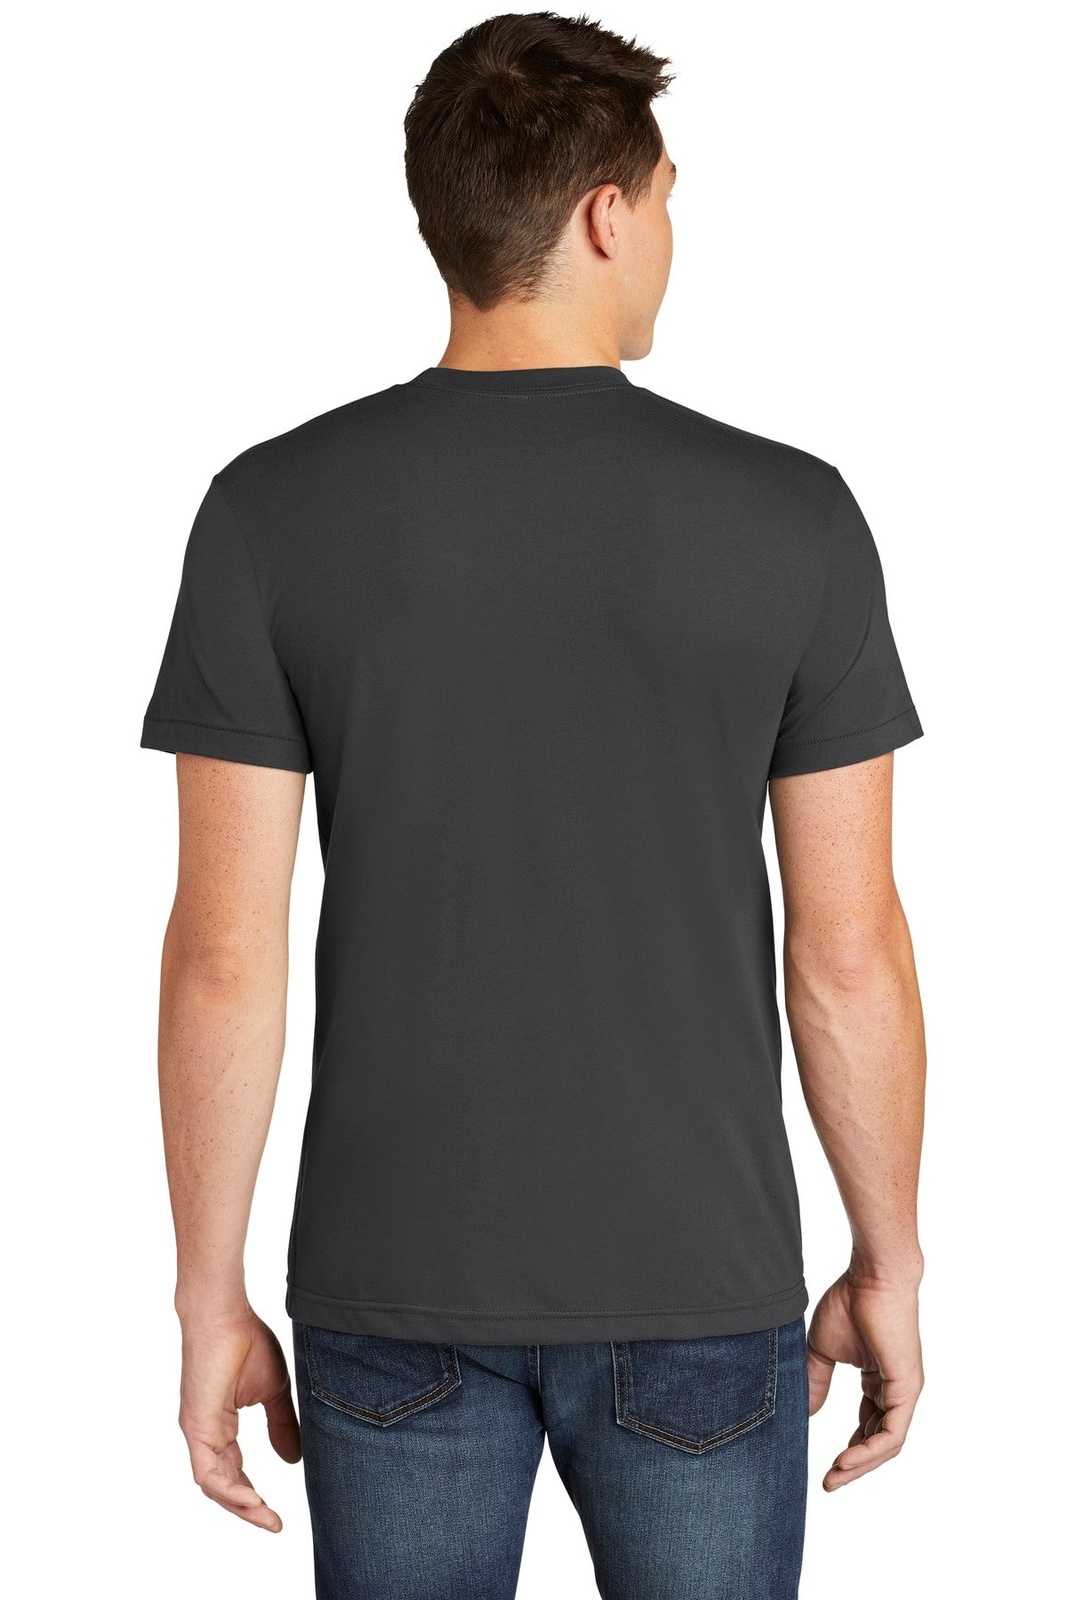 American Apparel BB401W Poly-Cotton T-Shirt - Asphalt - HIT a Double